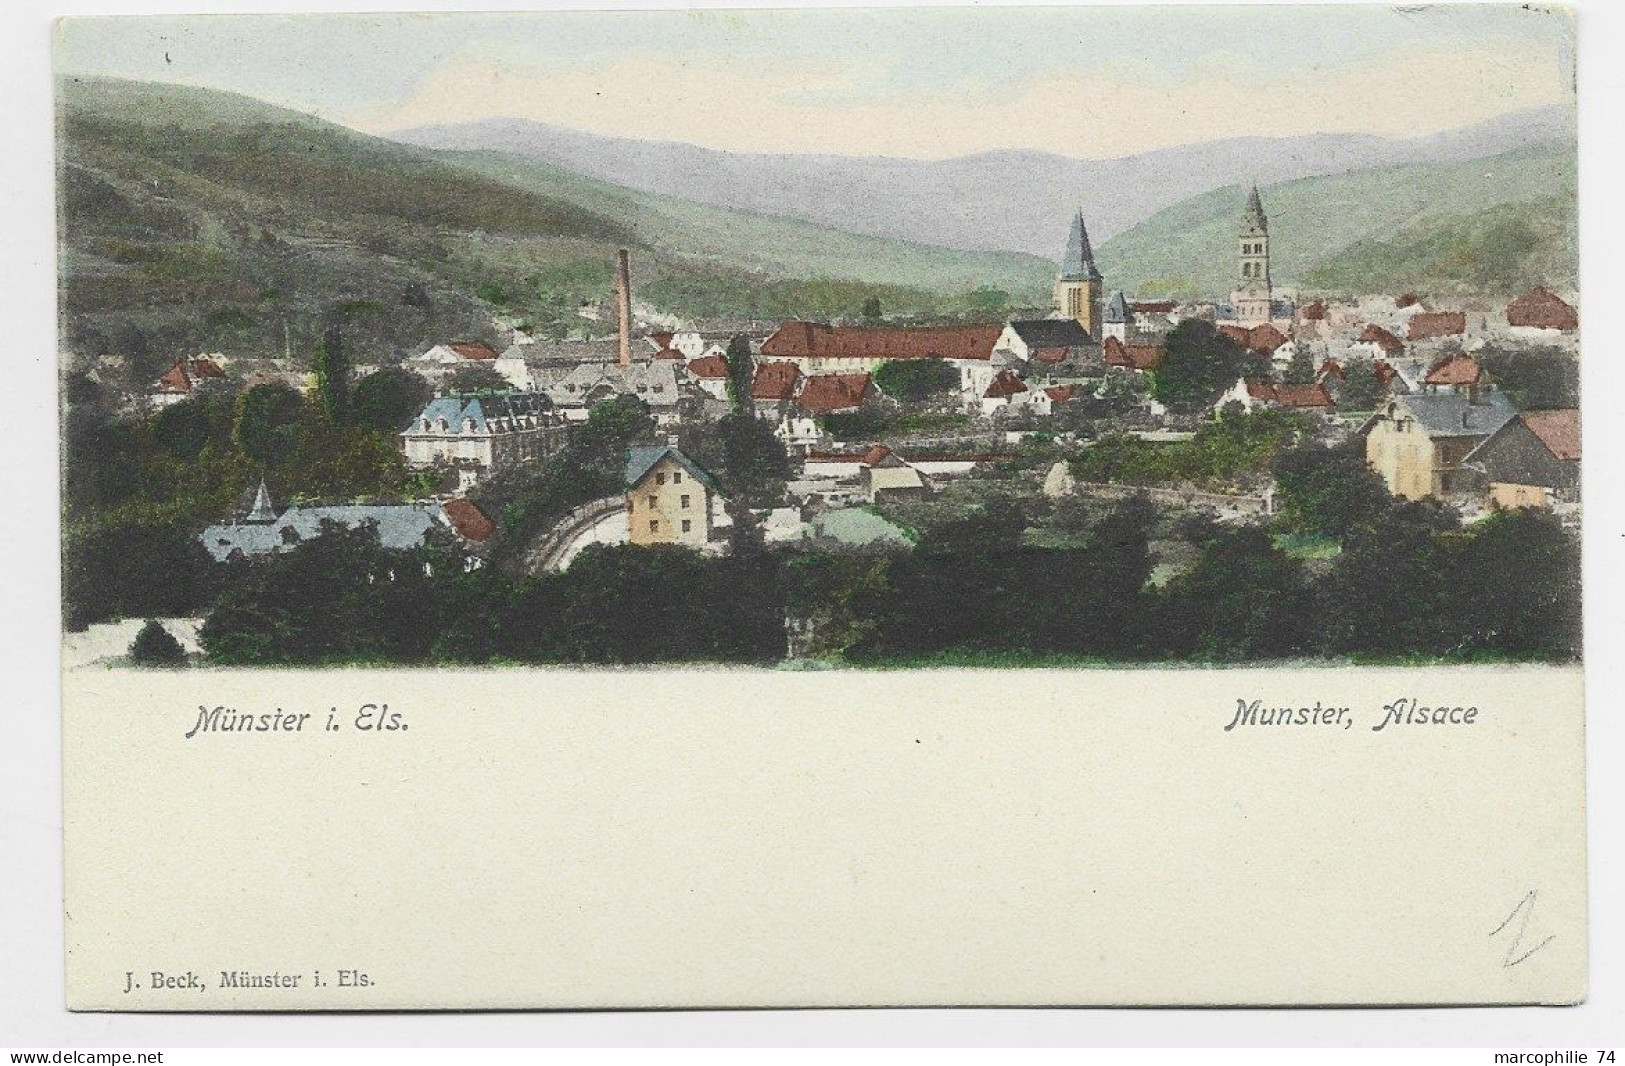 GERMANY GERMANIA 5C CARTE MUNSTER ALSACE AMBULANT COLMAR (ELS) MUNSTER BAHNPOST 18.9.1901 - Bahnpost